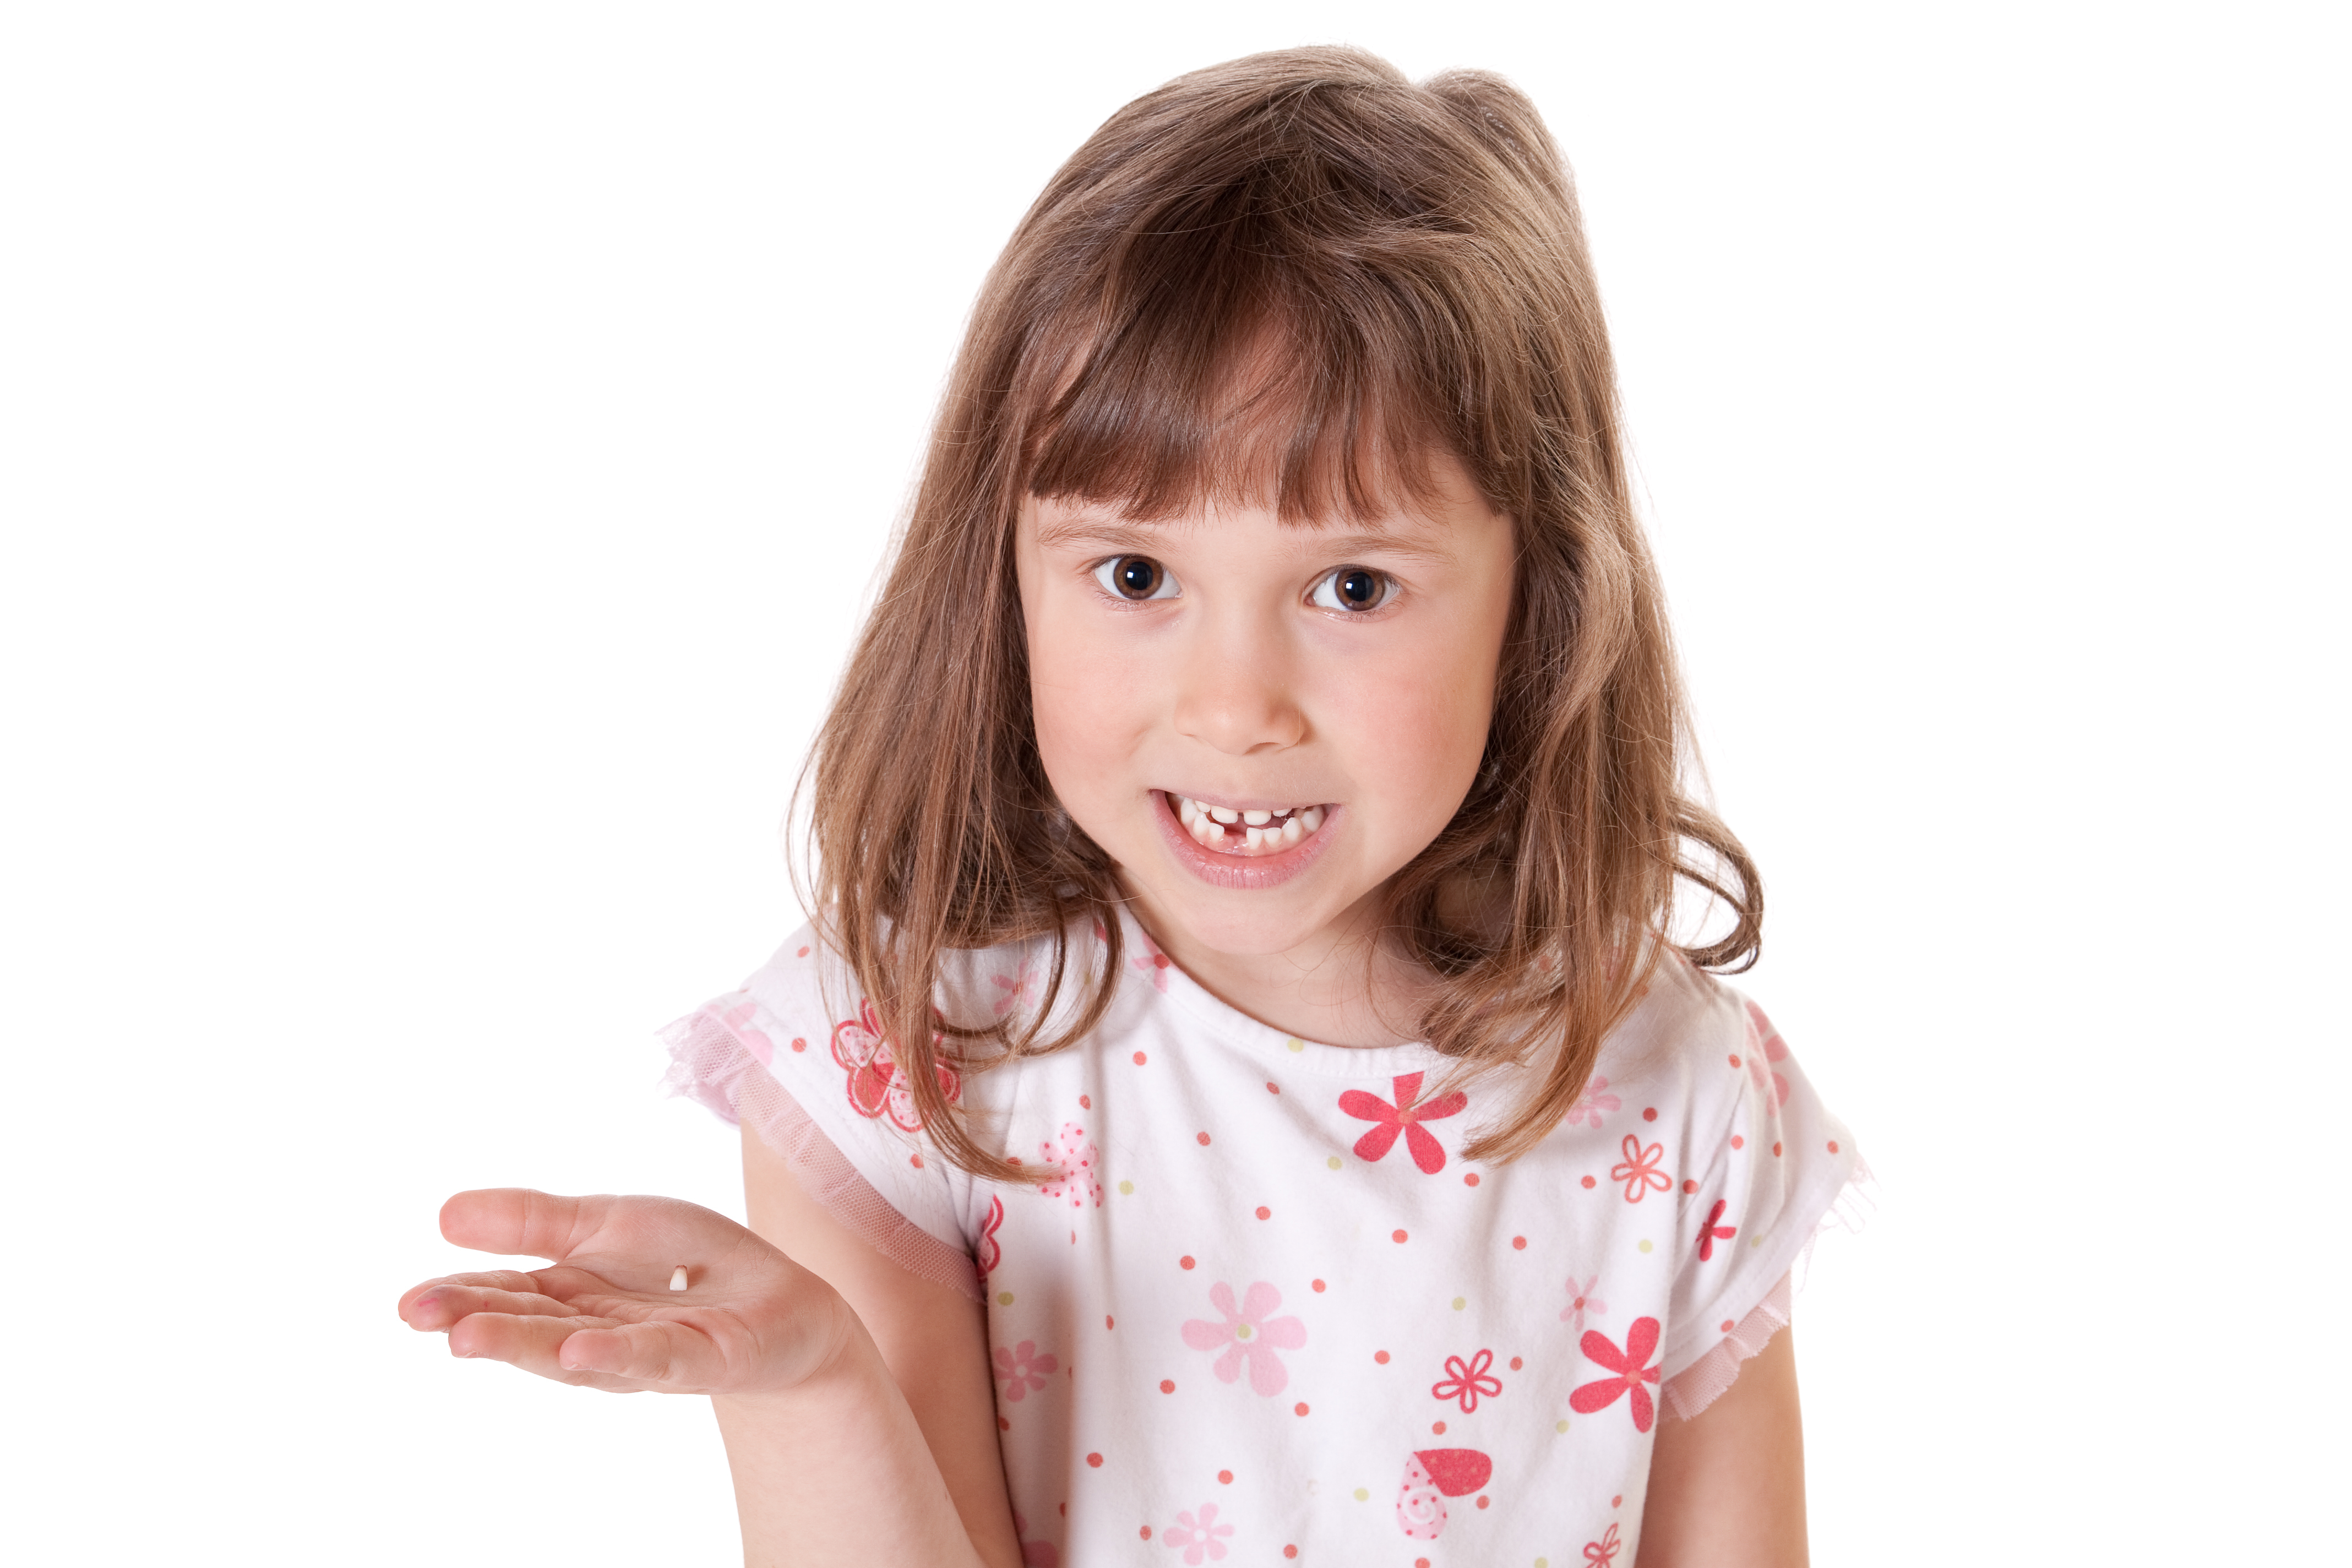 Girls tend to lose their baby teeth before boys.